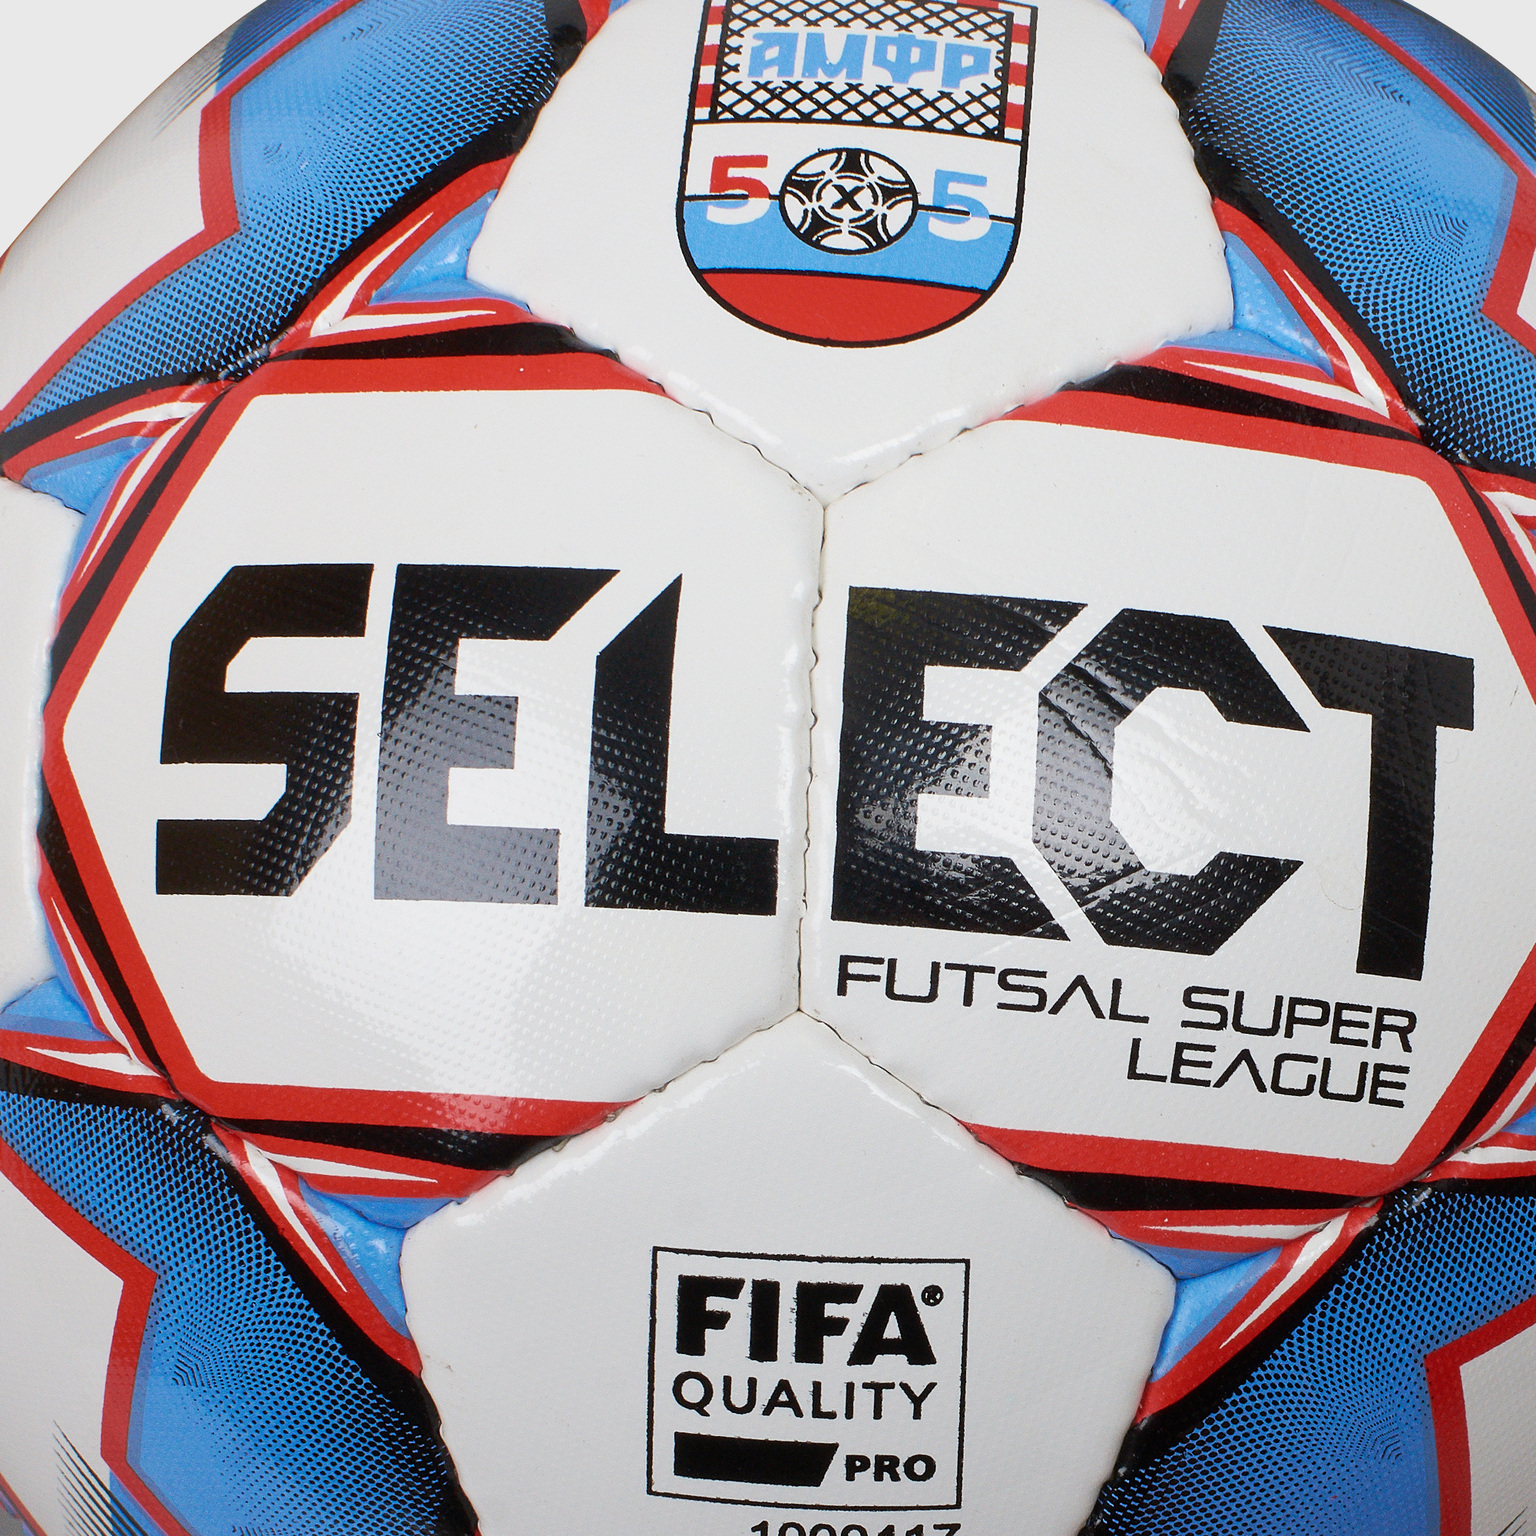 Футзальный мяч Select Super League АМФР РФС FIFA 850718-172 